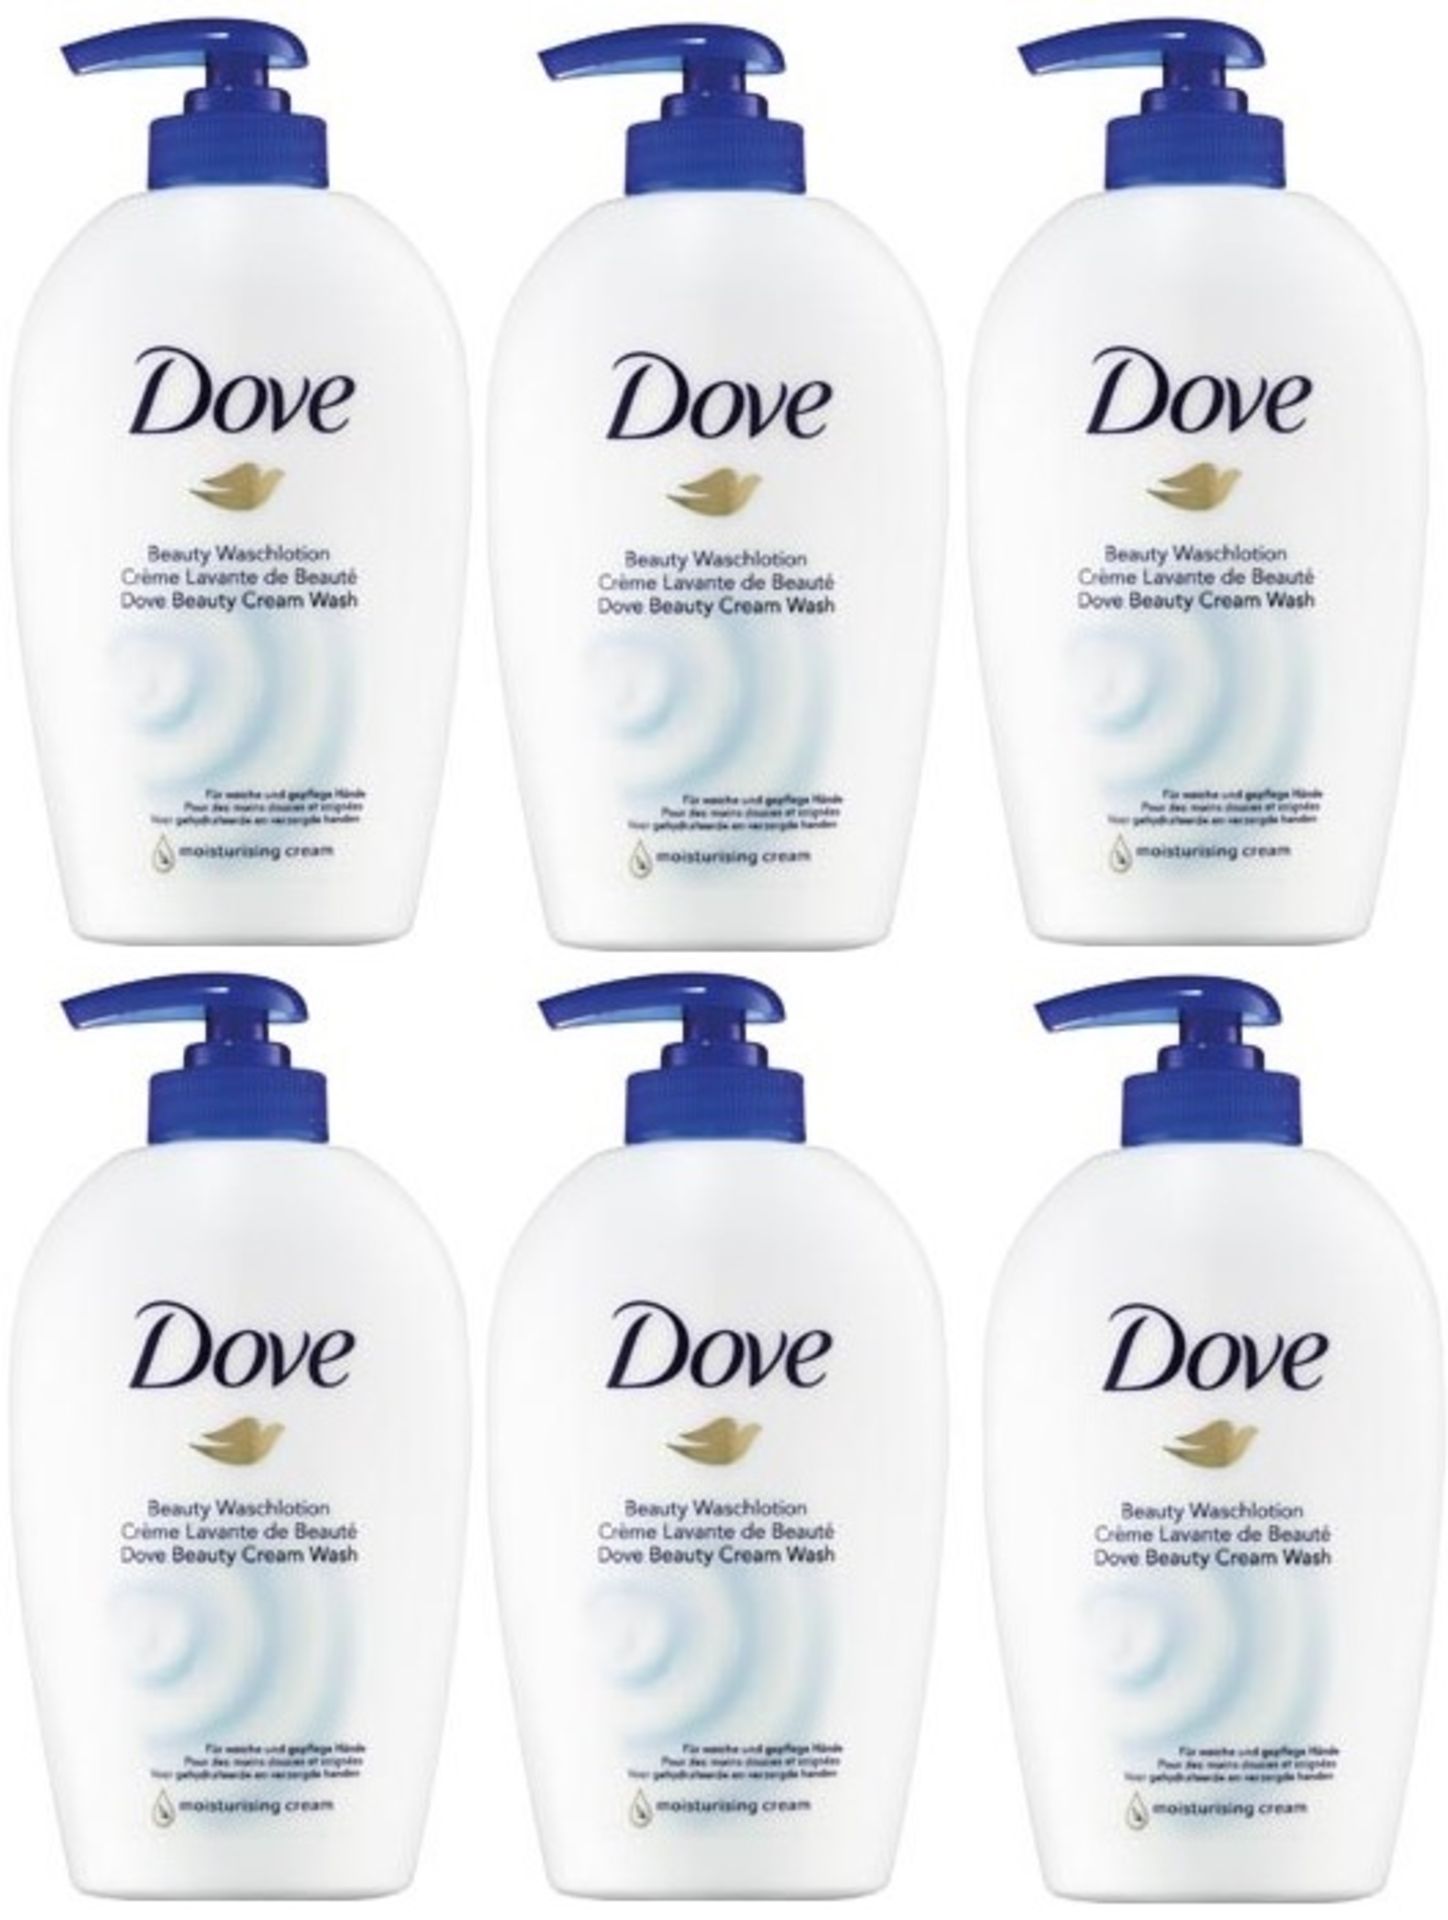 V *TRADE QTY* Brand New Six Pump Bottles Of Dove Moisturising Beauty Cream Wash 250ml Total SRP£12.